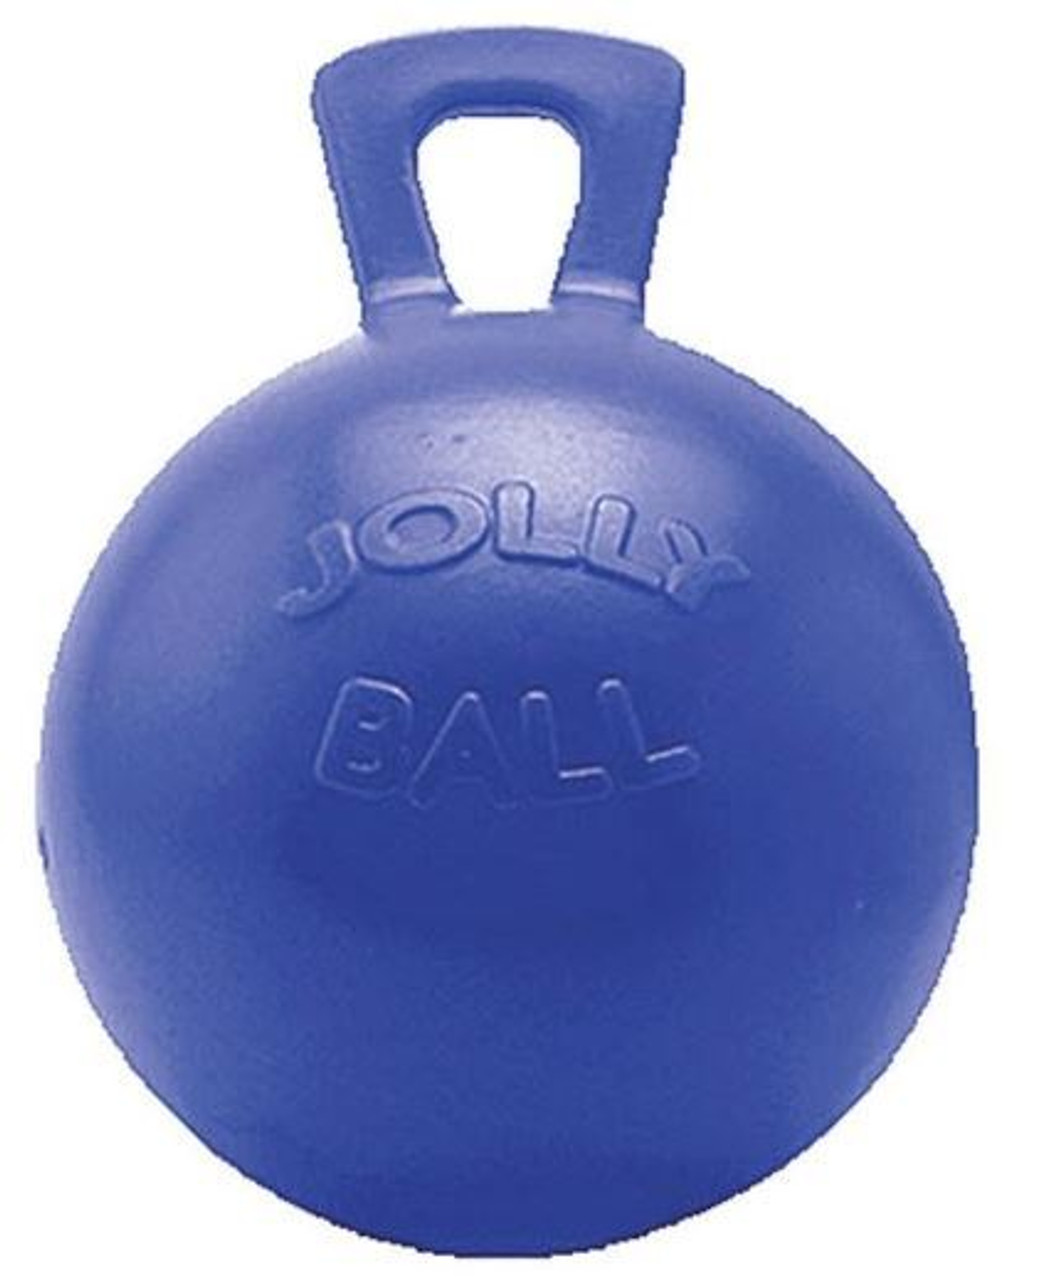 Horsemen's Pride Blue Jolly Ball for Equine 10 Inch 788169041026 for sale online 